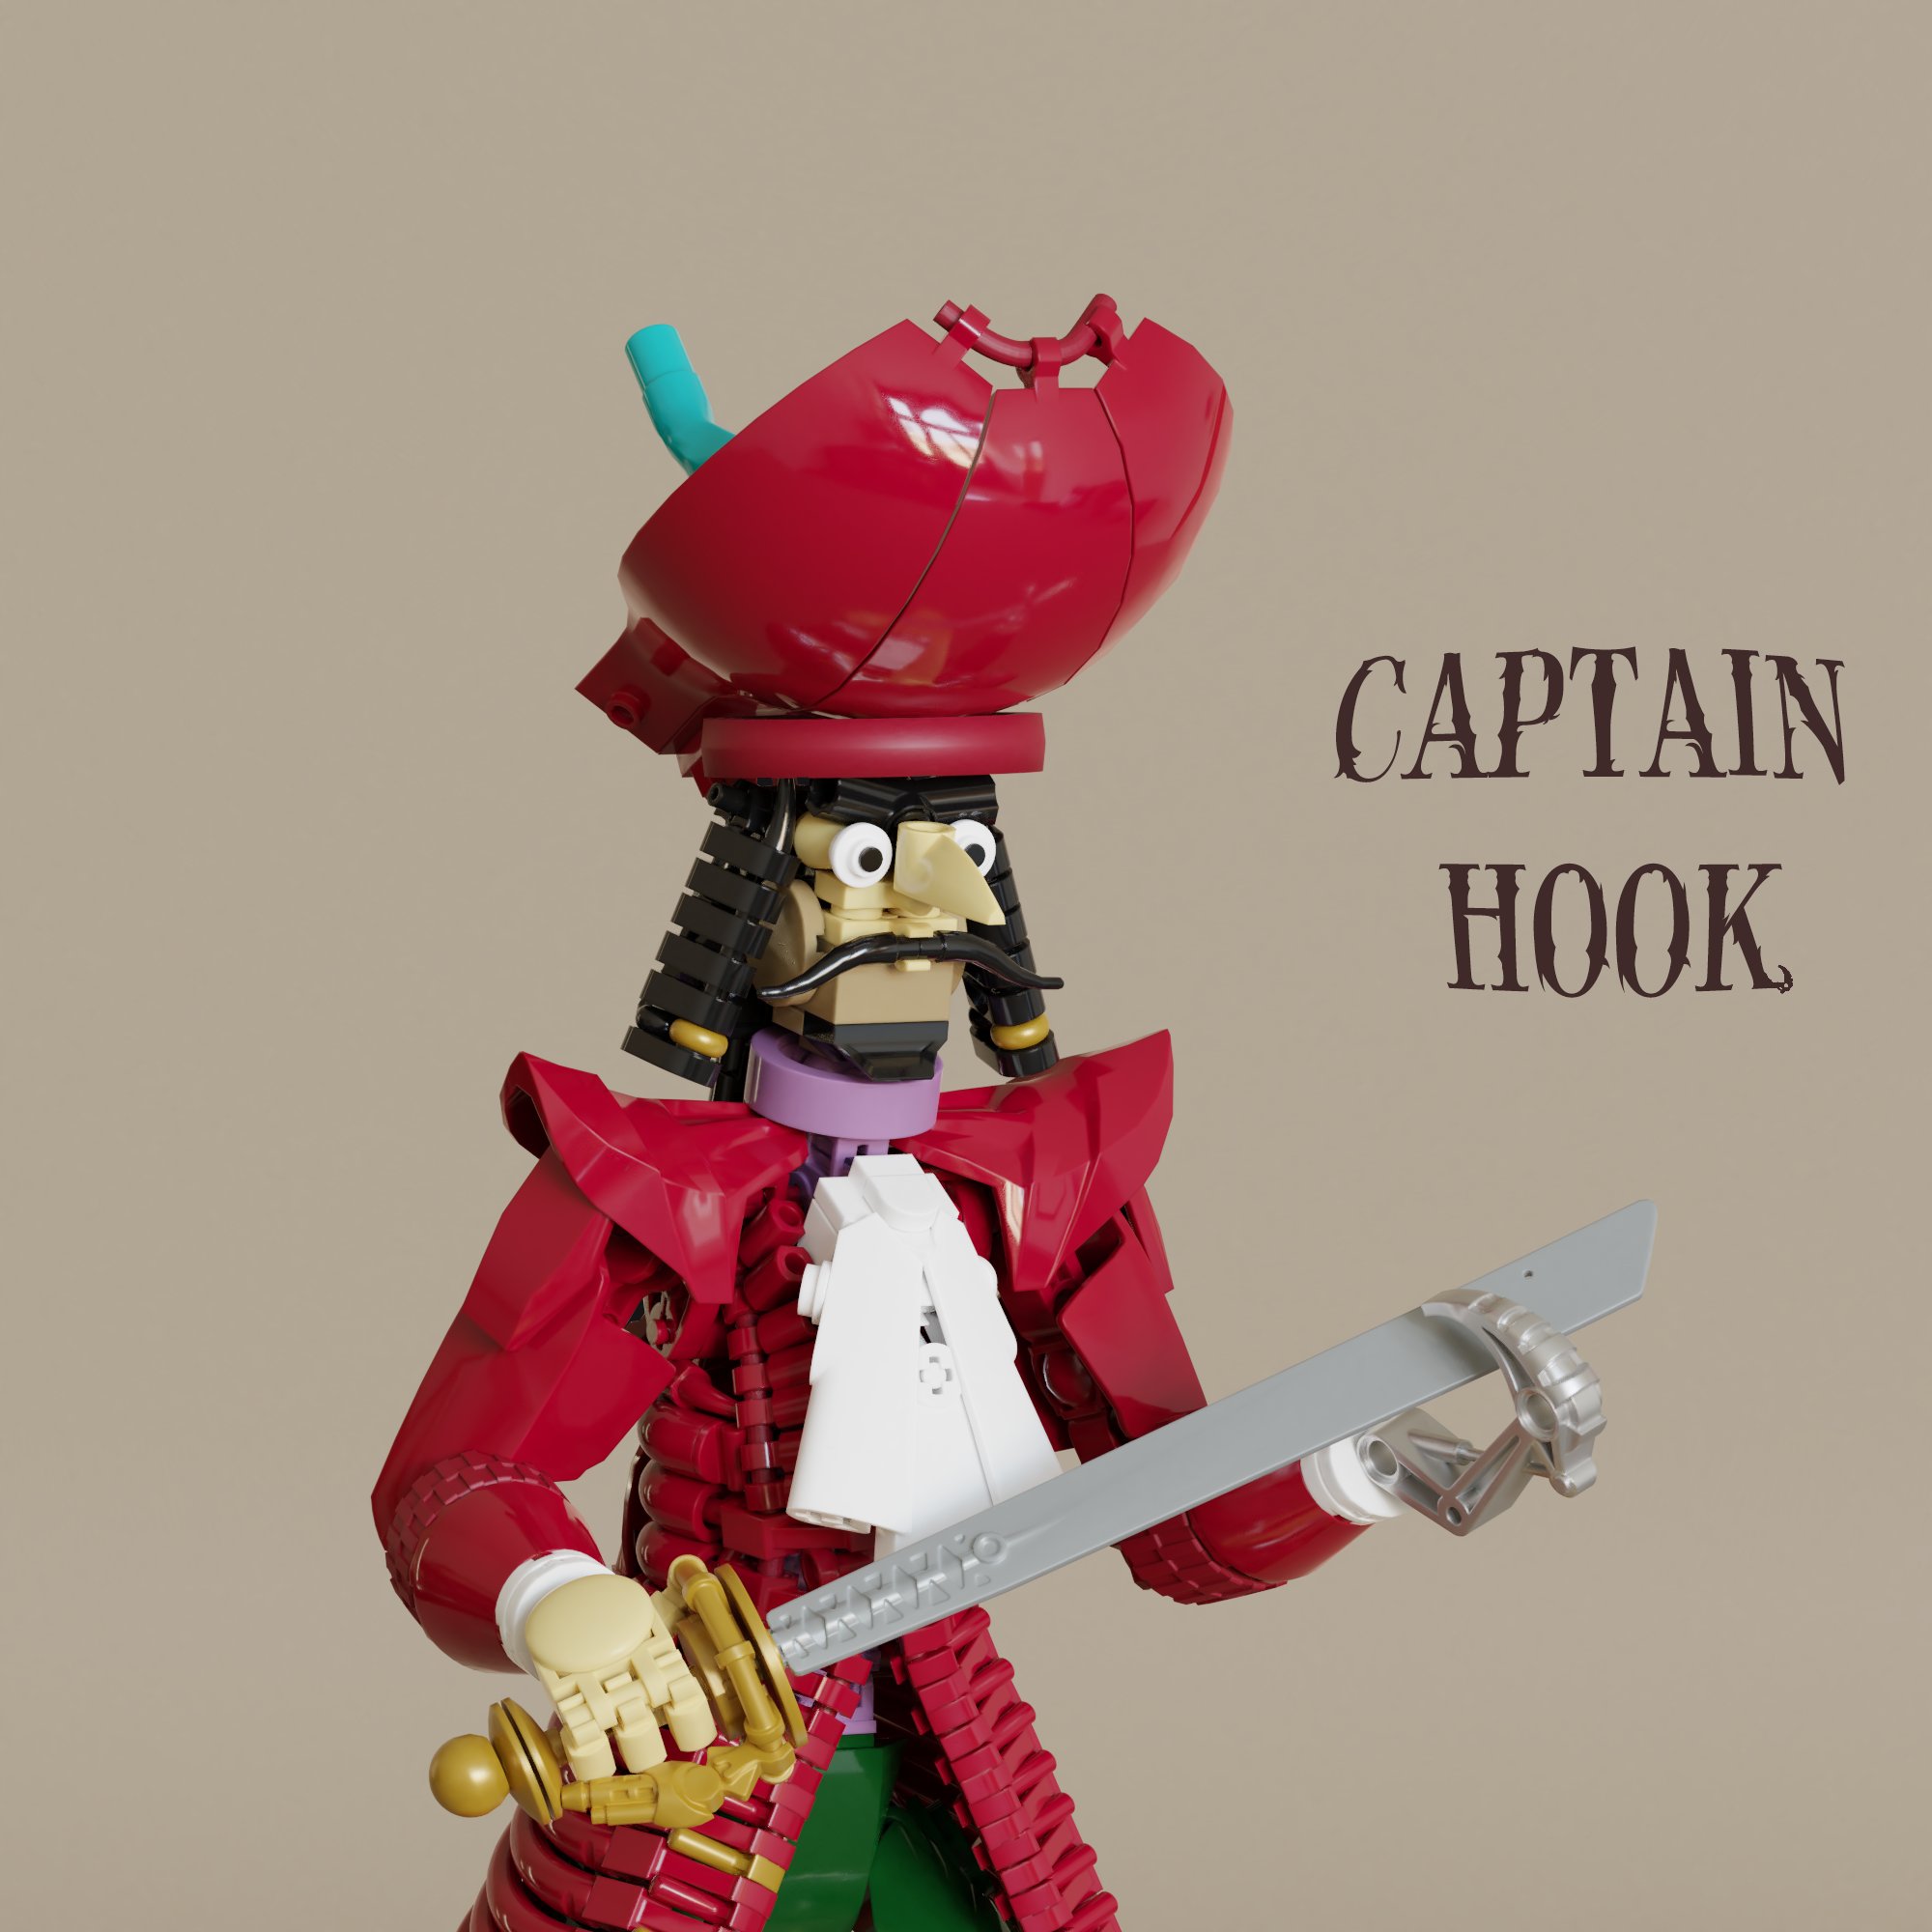 Ivan Martynov on X: Captain Hook #LEGO #レゴ #MOC